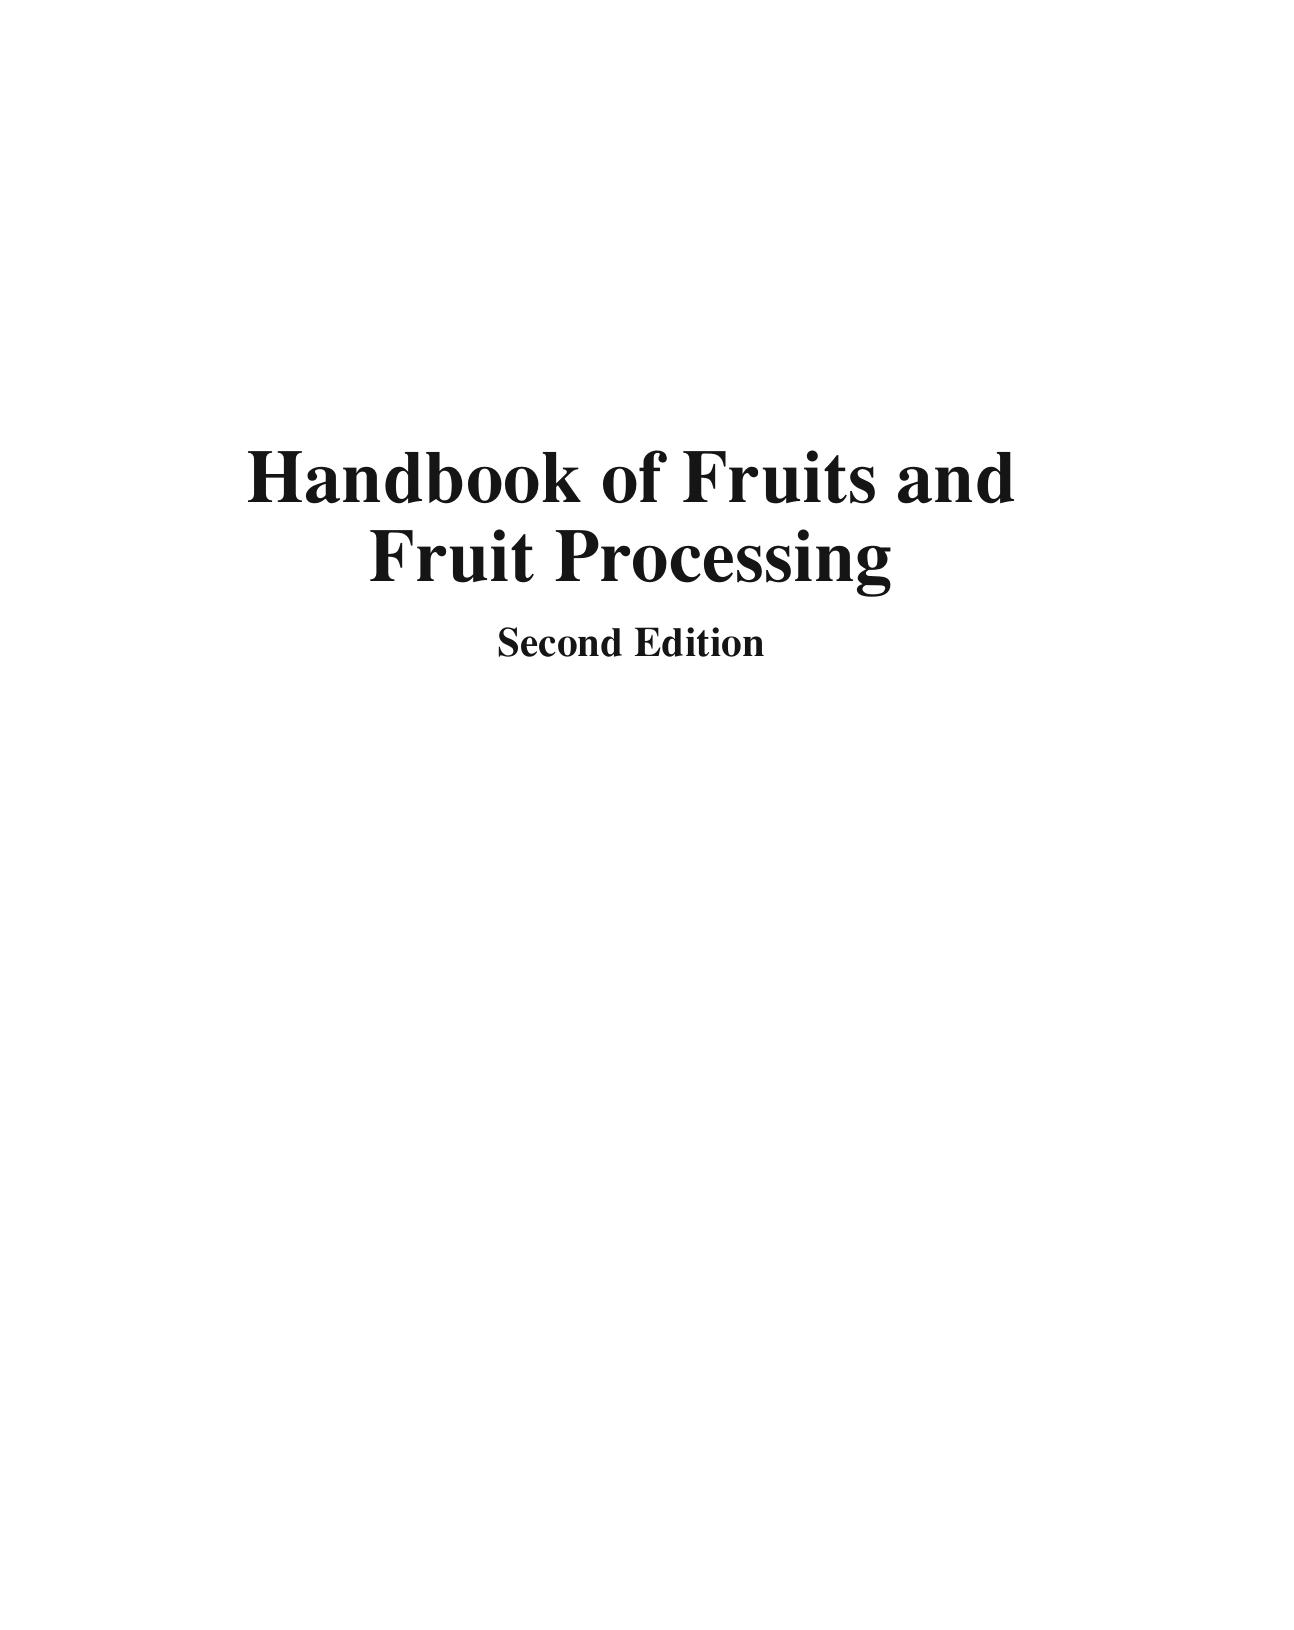 Handbook of fruits & fruit processing, 2nd ed 2012